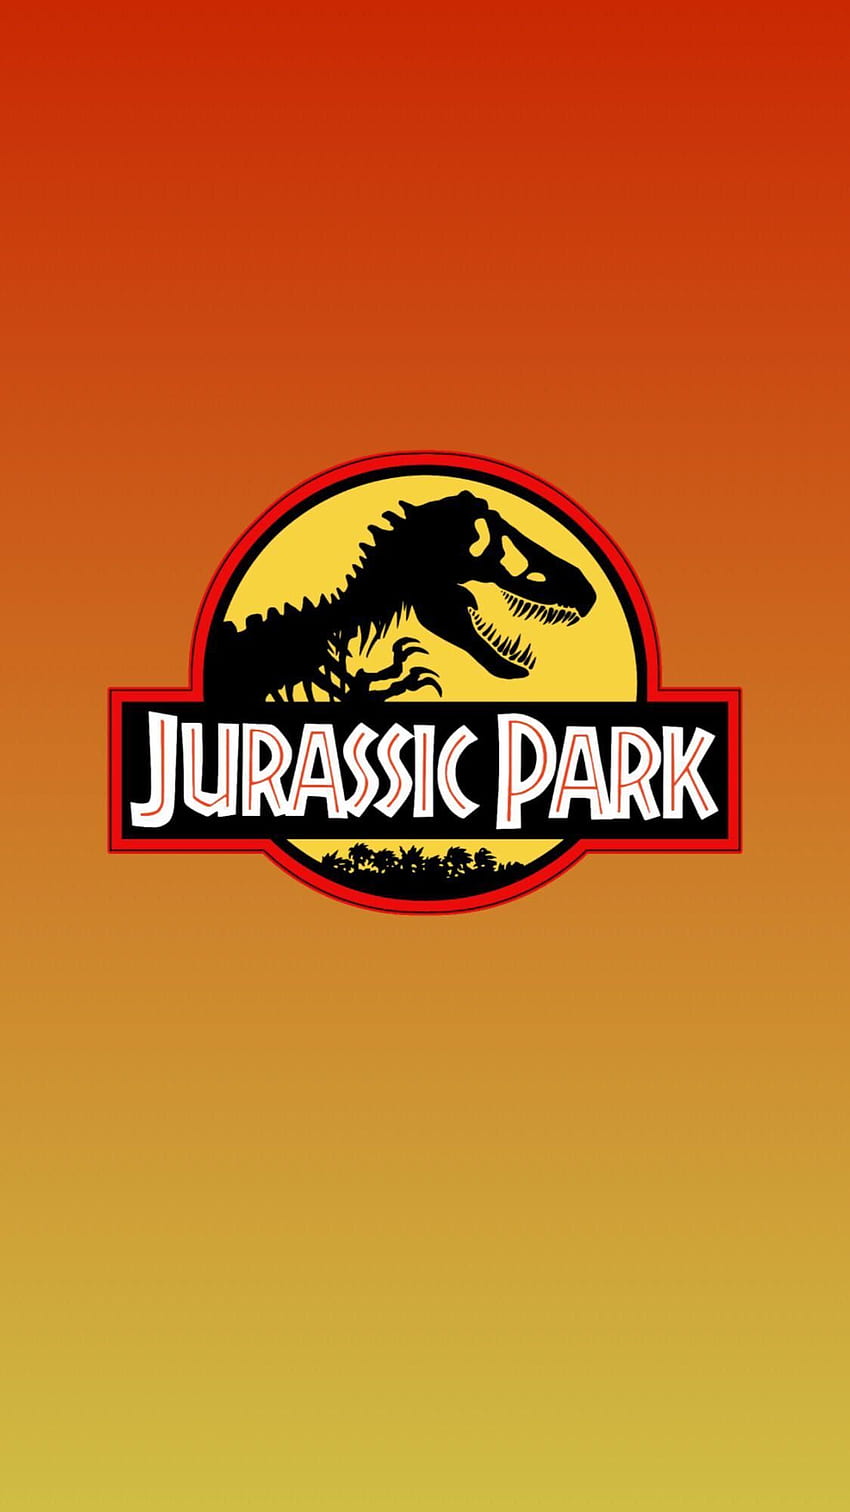 Jurassic Park Jurassic World Logo Movie Game Decal Vinyl Sticker | eBay